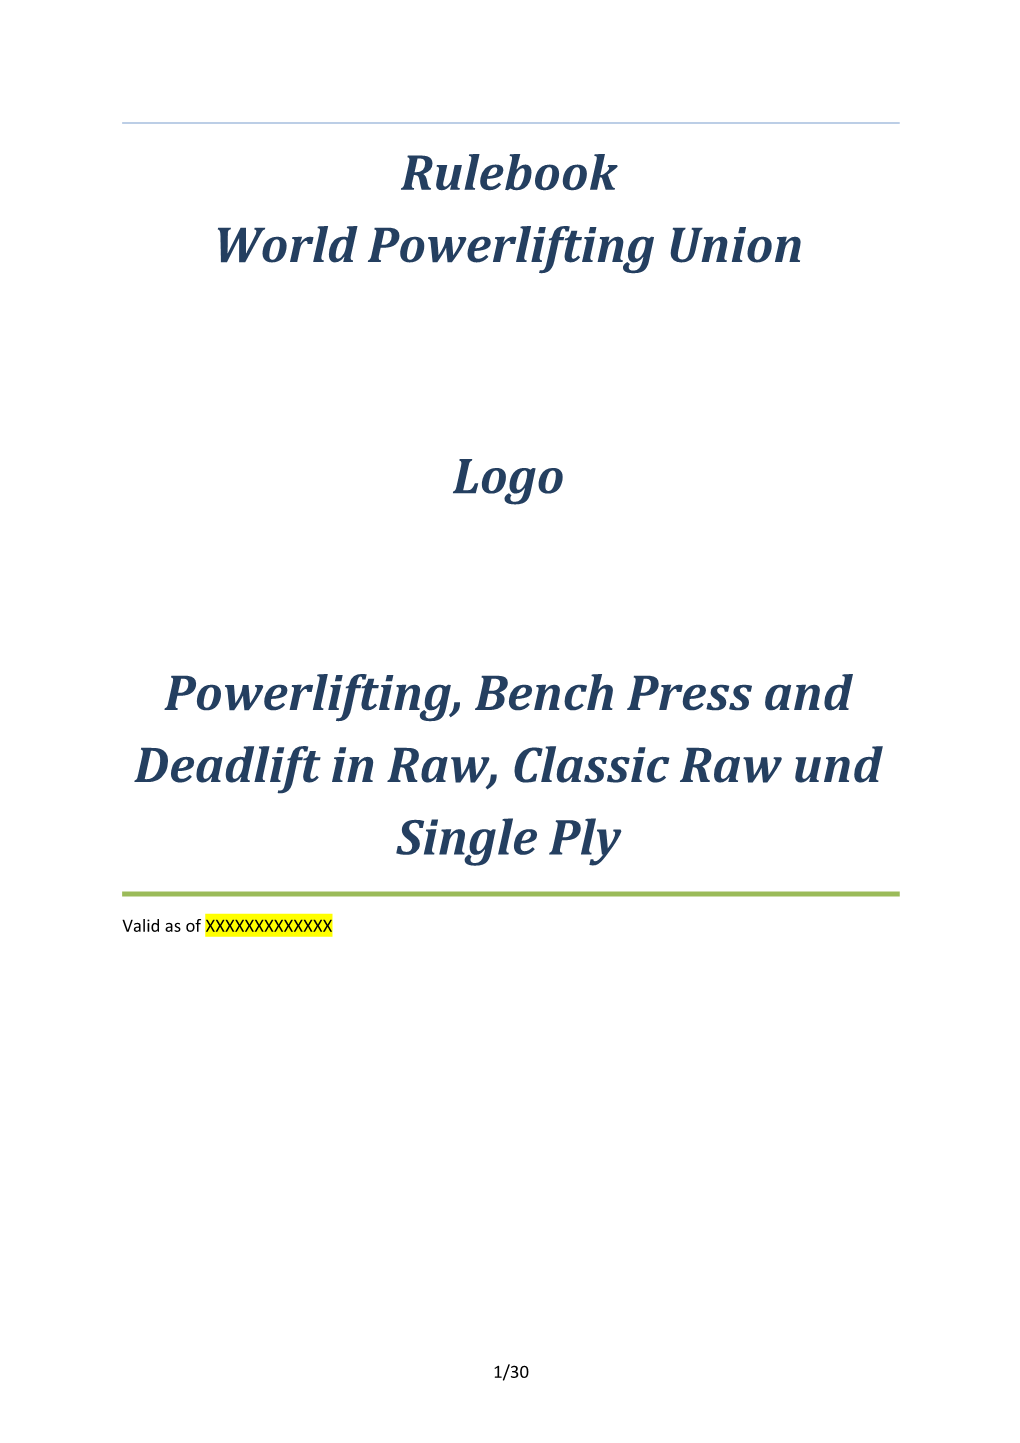 Rulebook World Powerlifting Union